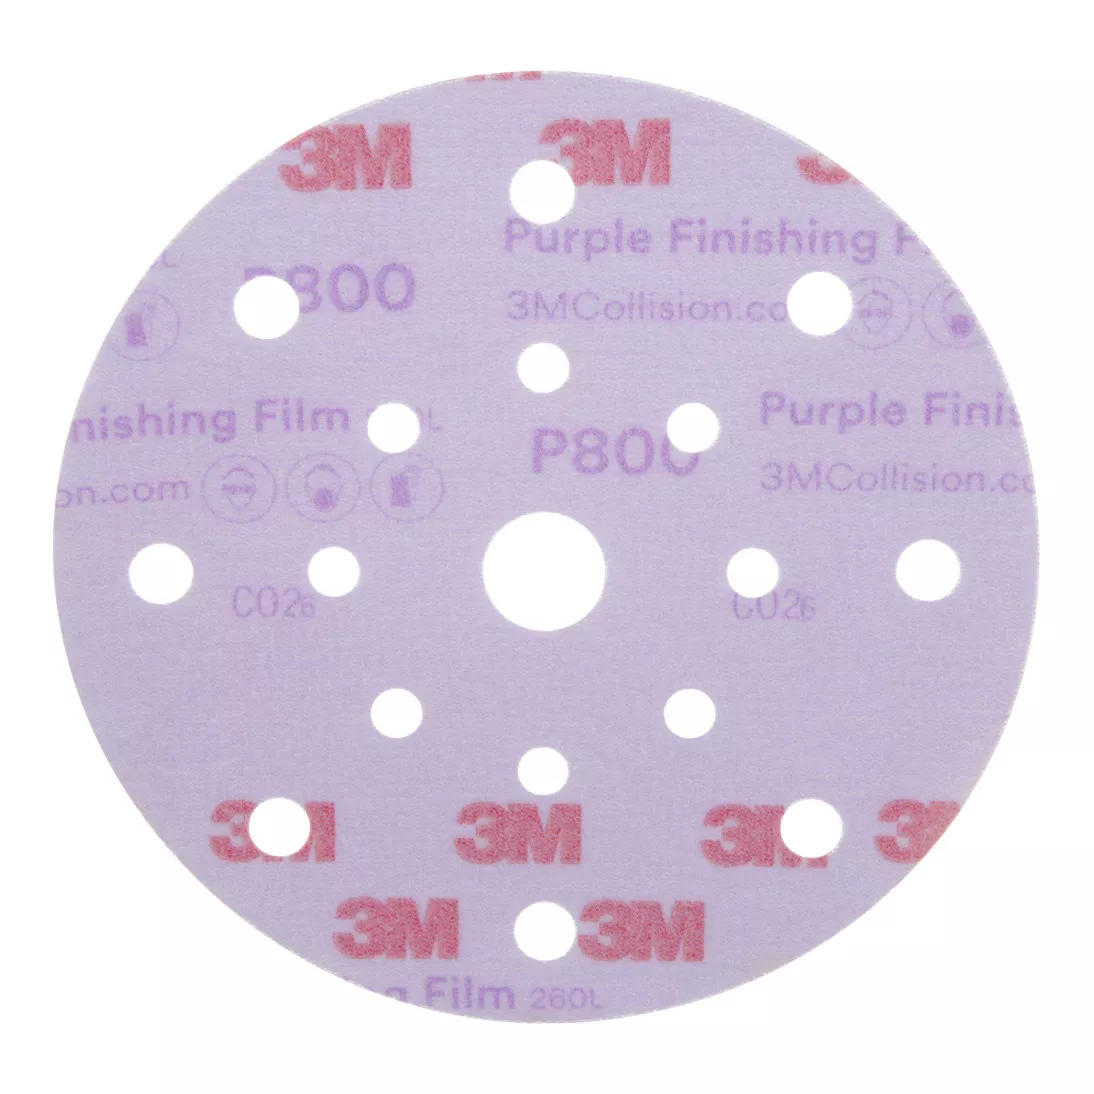 3M™ Hookit™ Purple Finishing Film Abrasive Disc 260L, 34871, 6 in, Dust
Free, P800, 50 discs per carton, 4 cartons per case